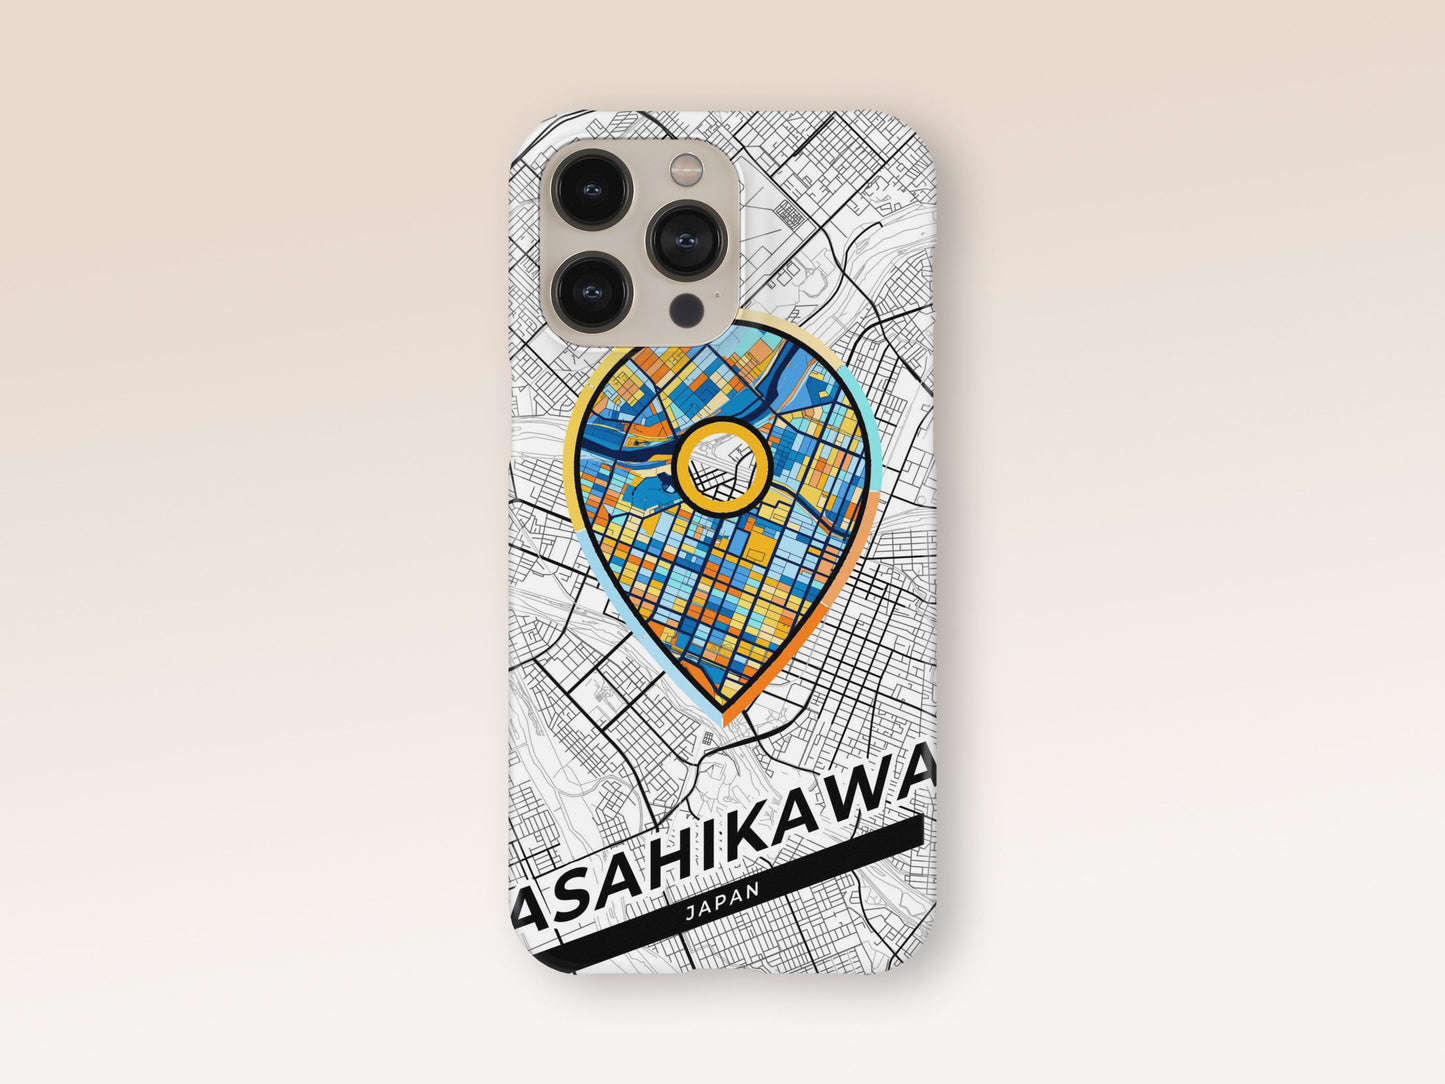 Asahikawa Japan slim phone case with colorful icon. Birthday, wedding or housewarming gift. Couple match cases. 1